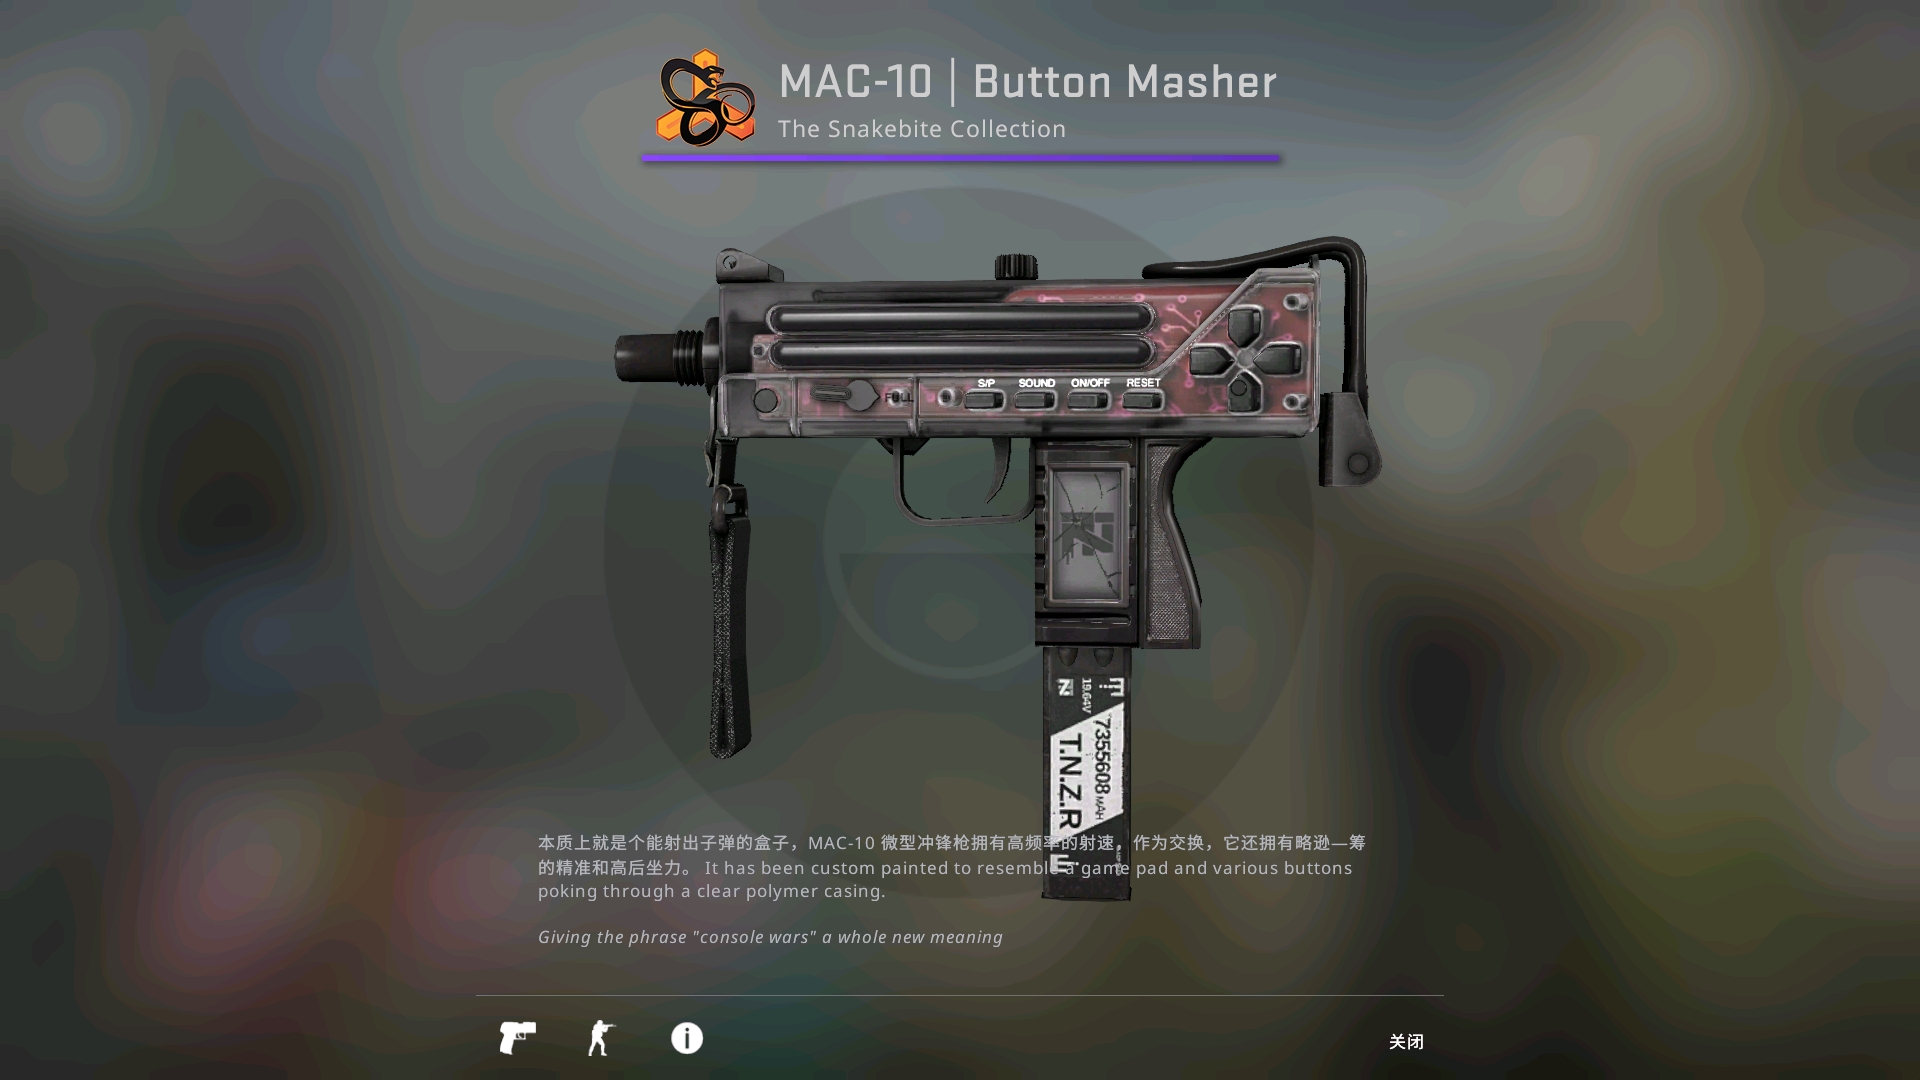 download the new version MAC-10 Button Masher cs go skin